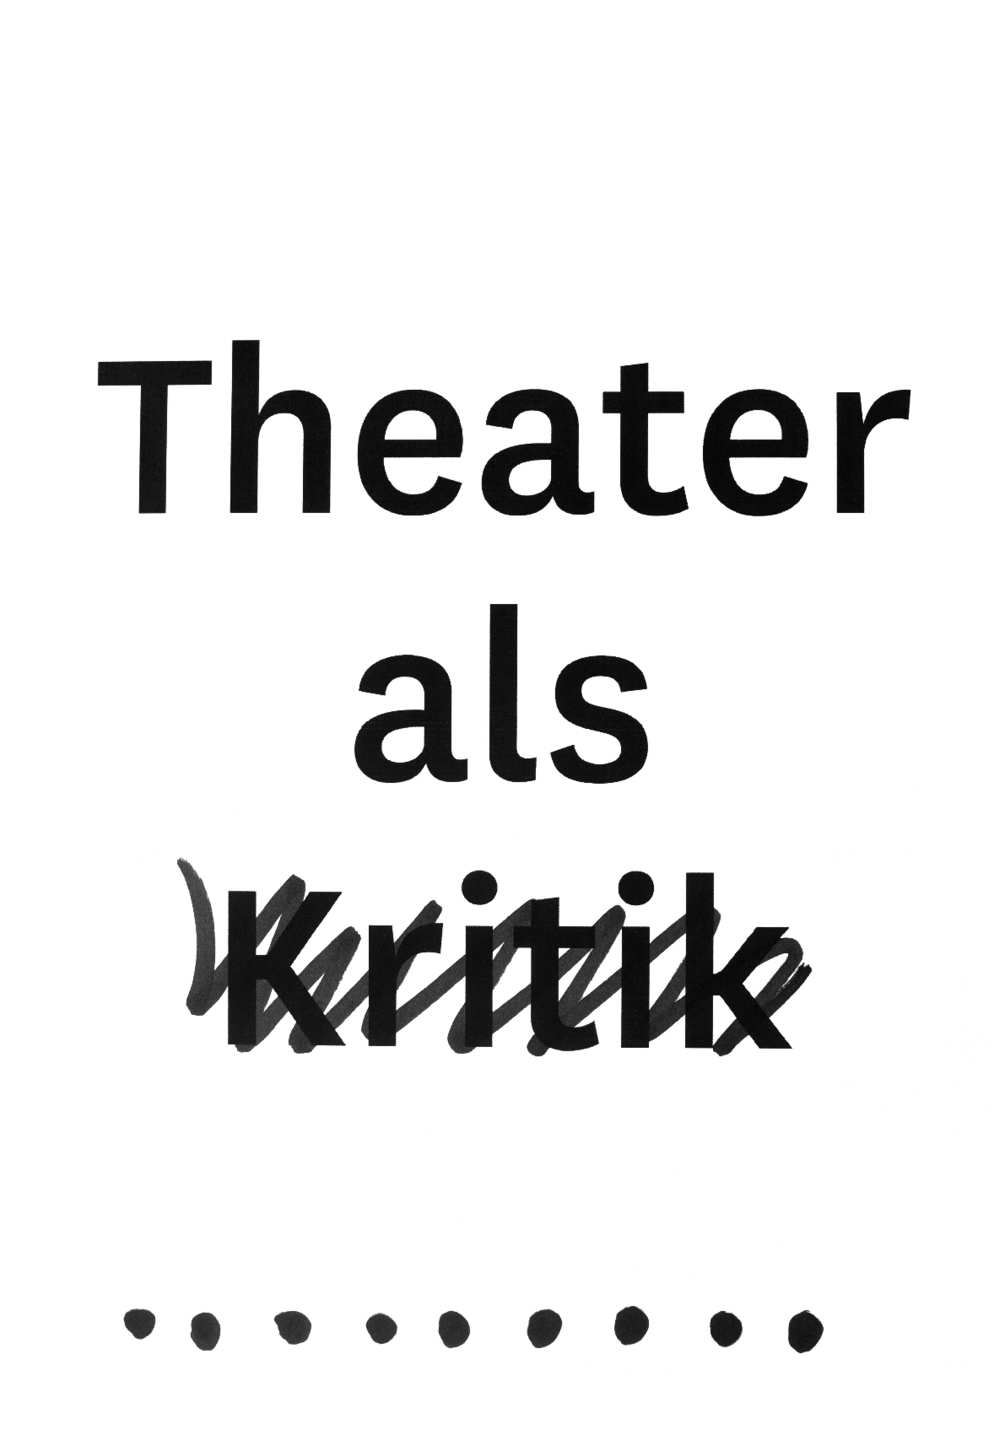 theater-as-critique-slip-14-1005x1435px